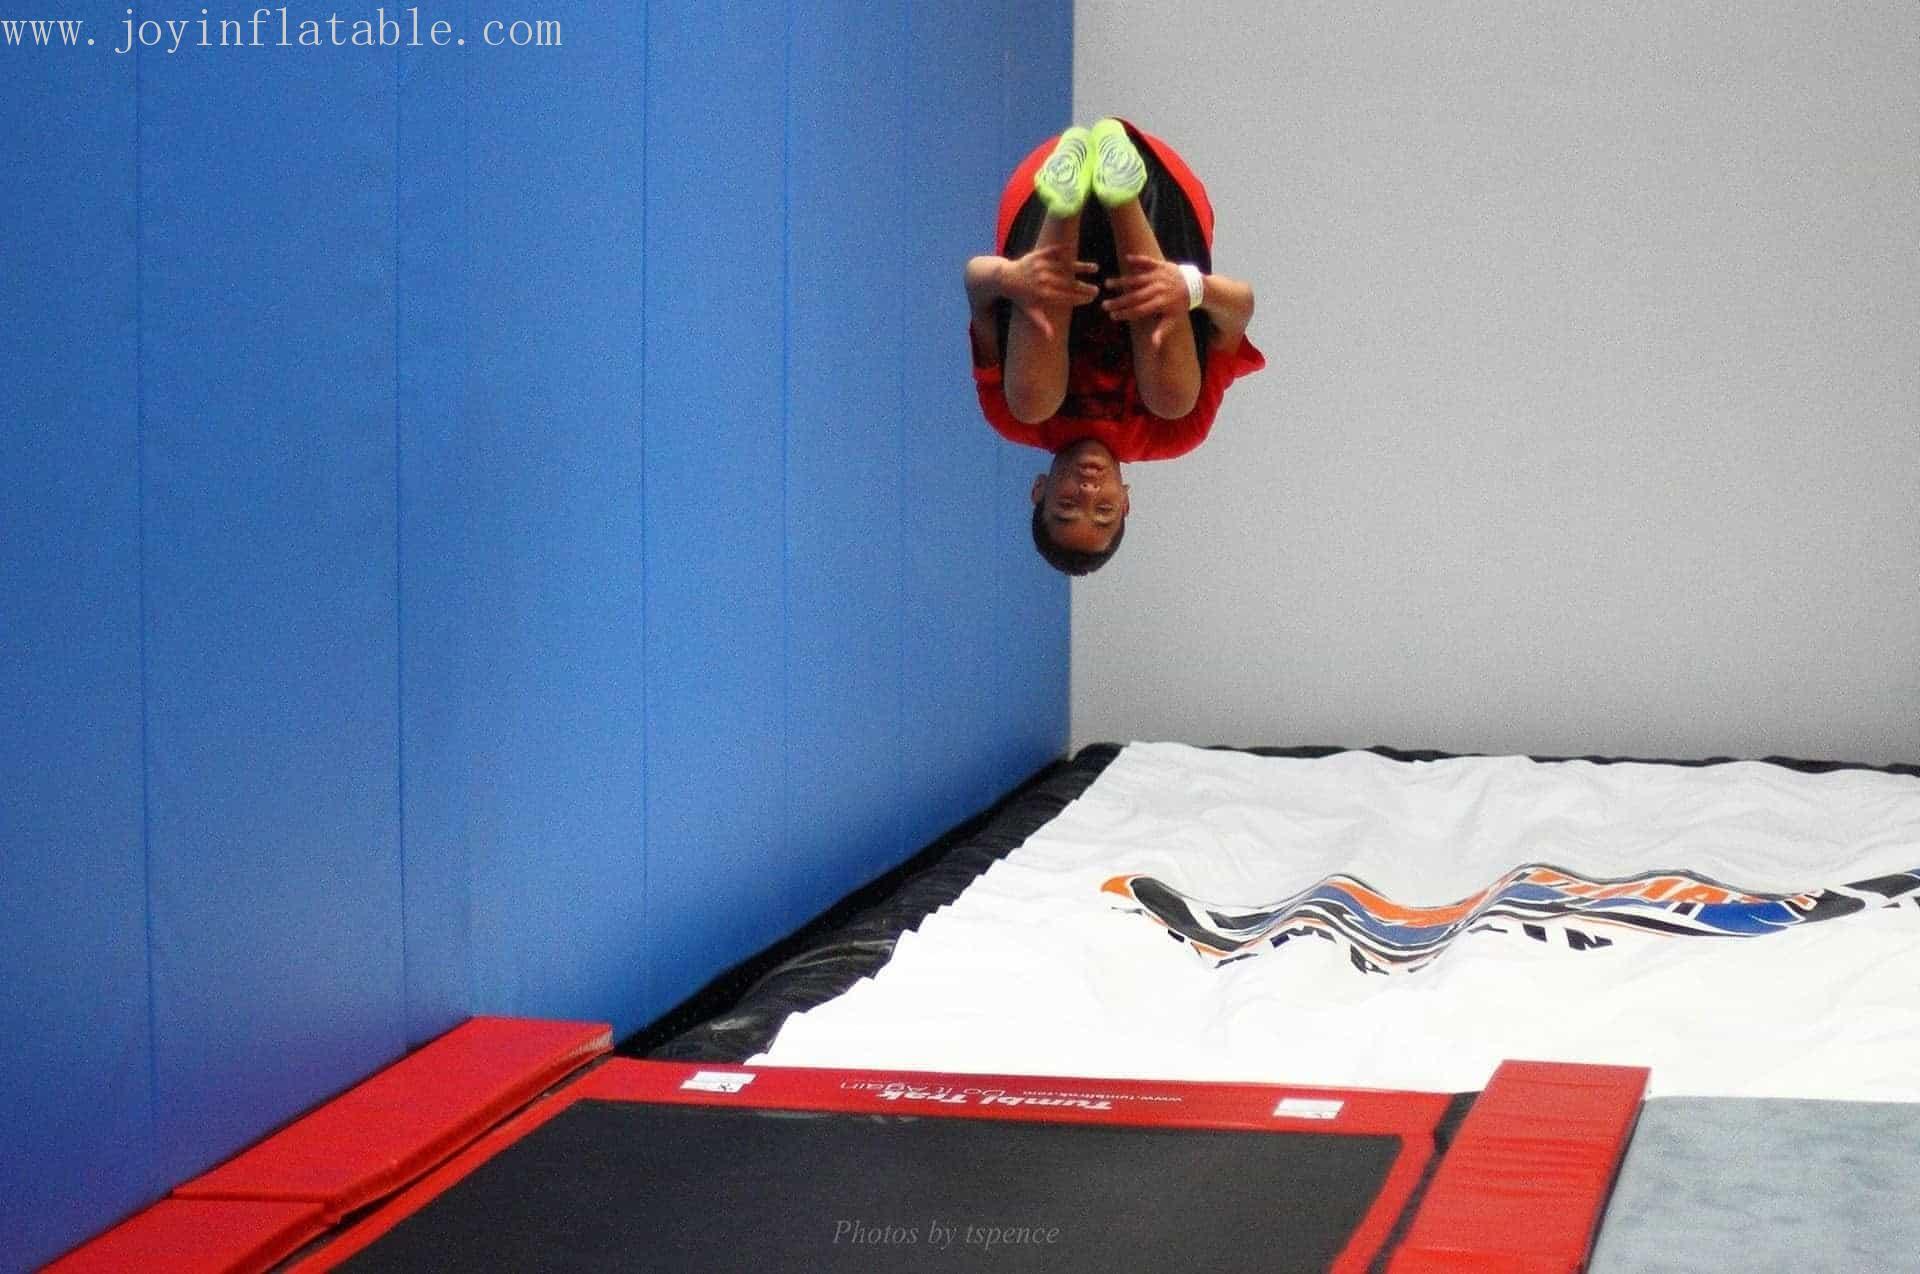 landing stunt mat series for child JOY inflatable